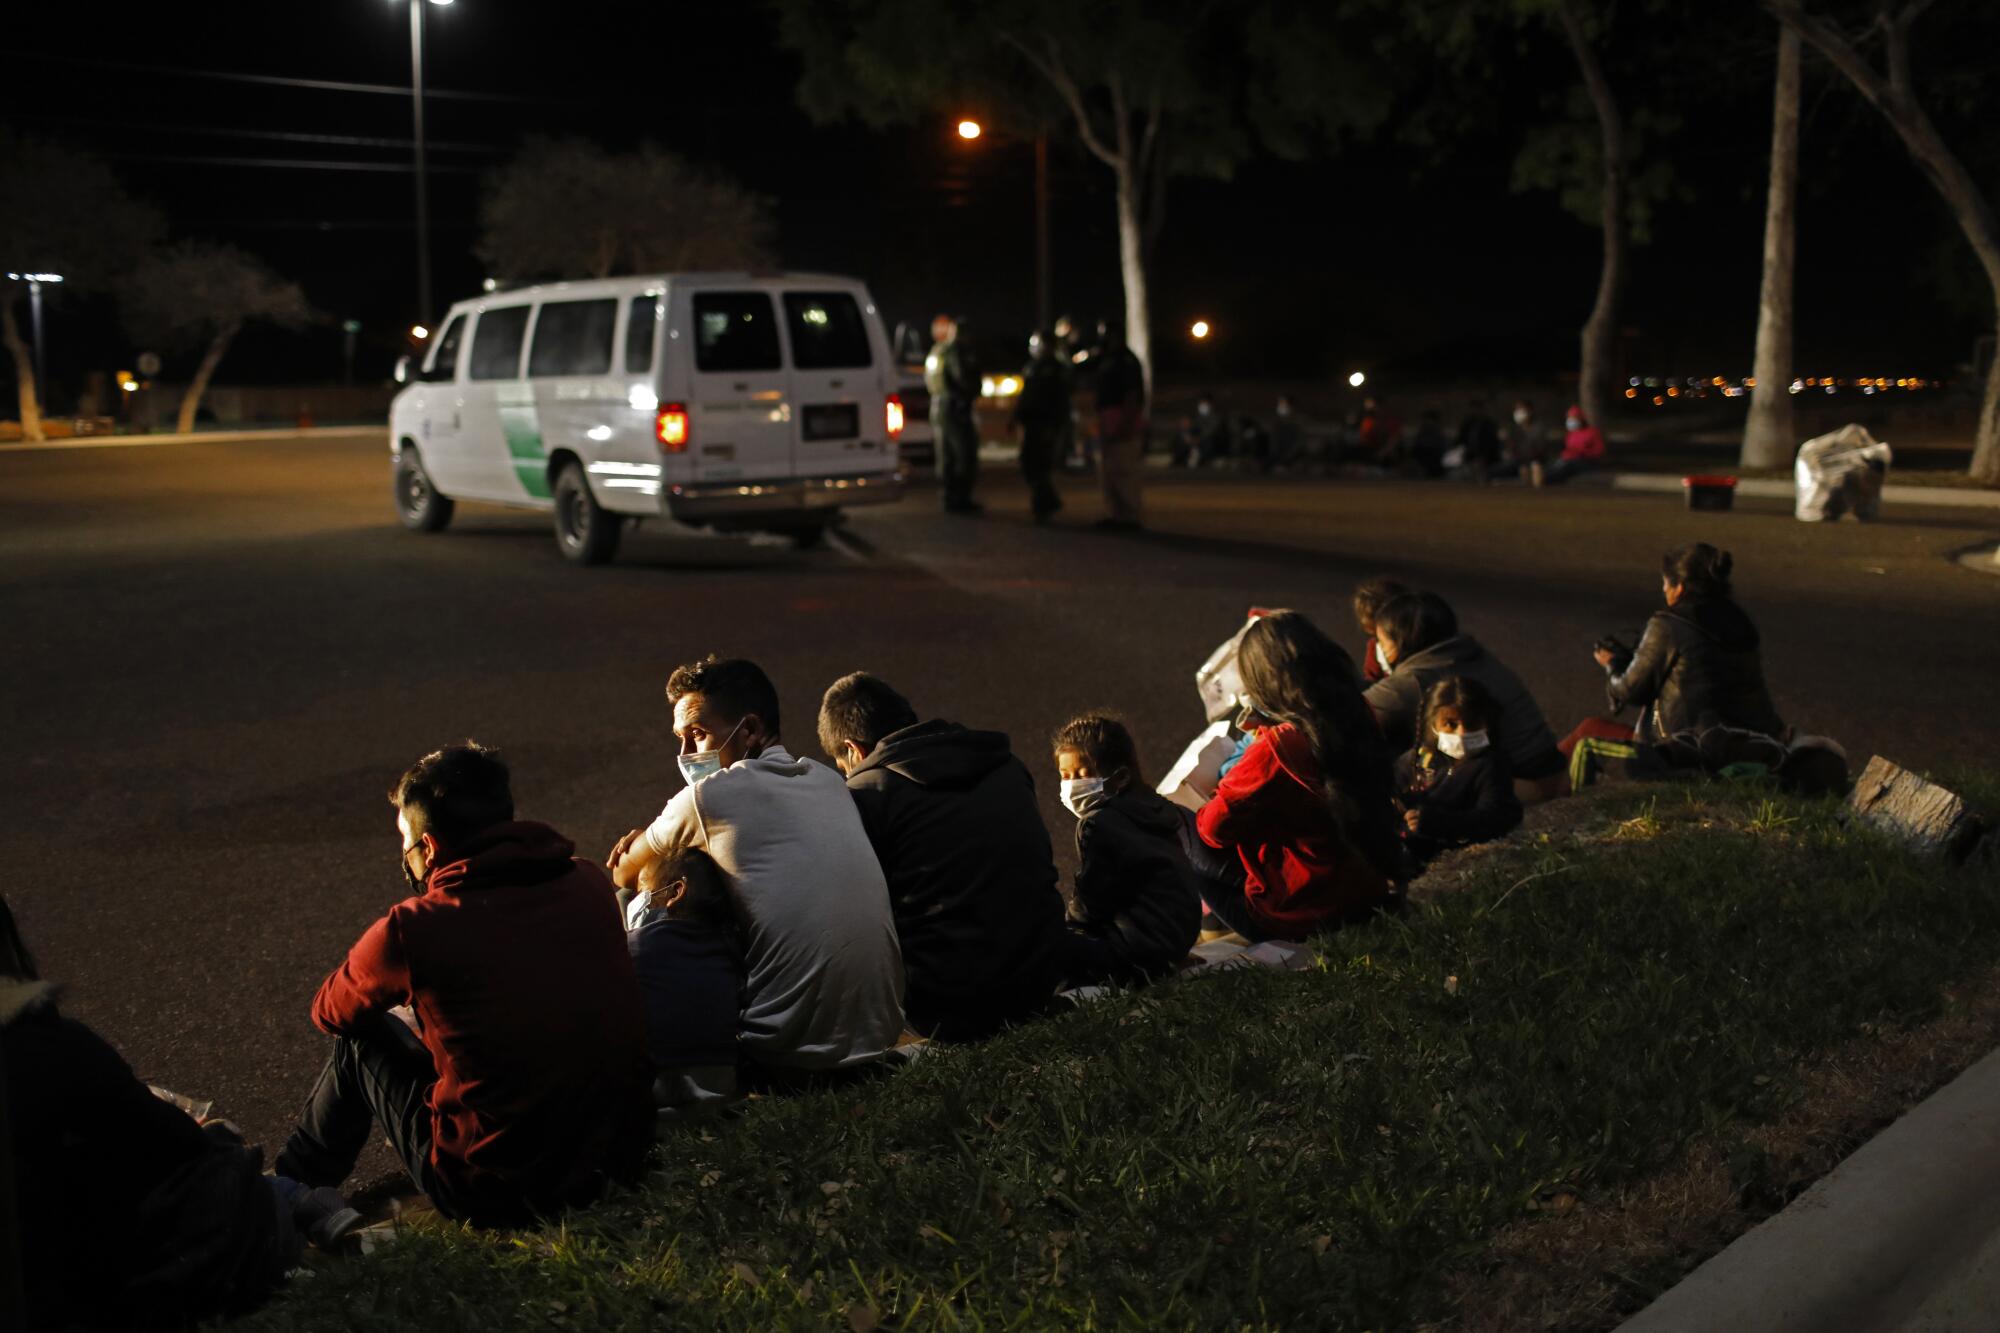 Several asylum seekers sit on a curb.